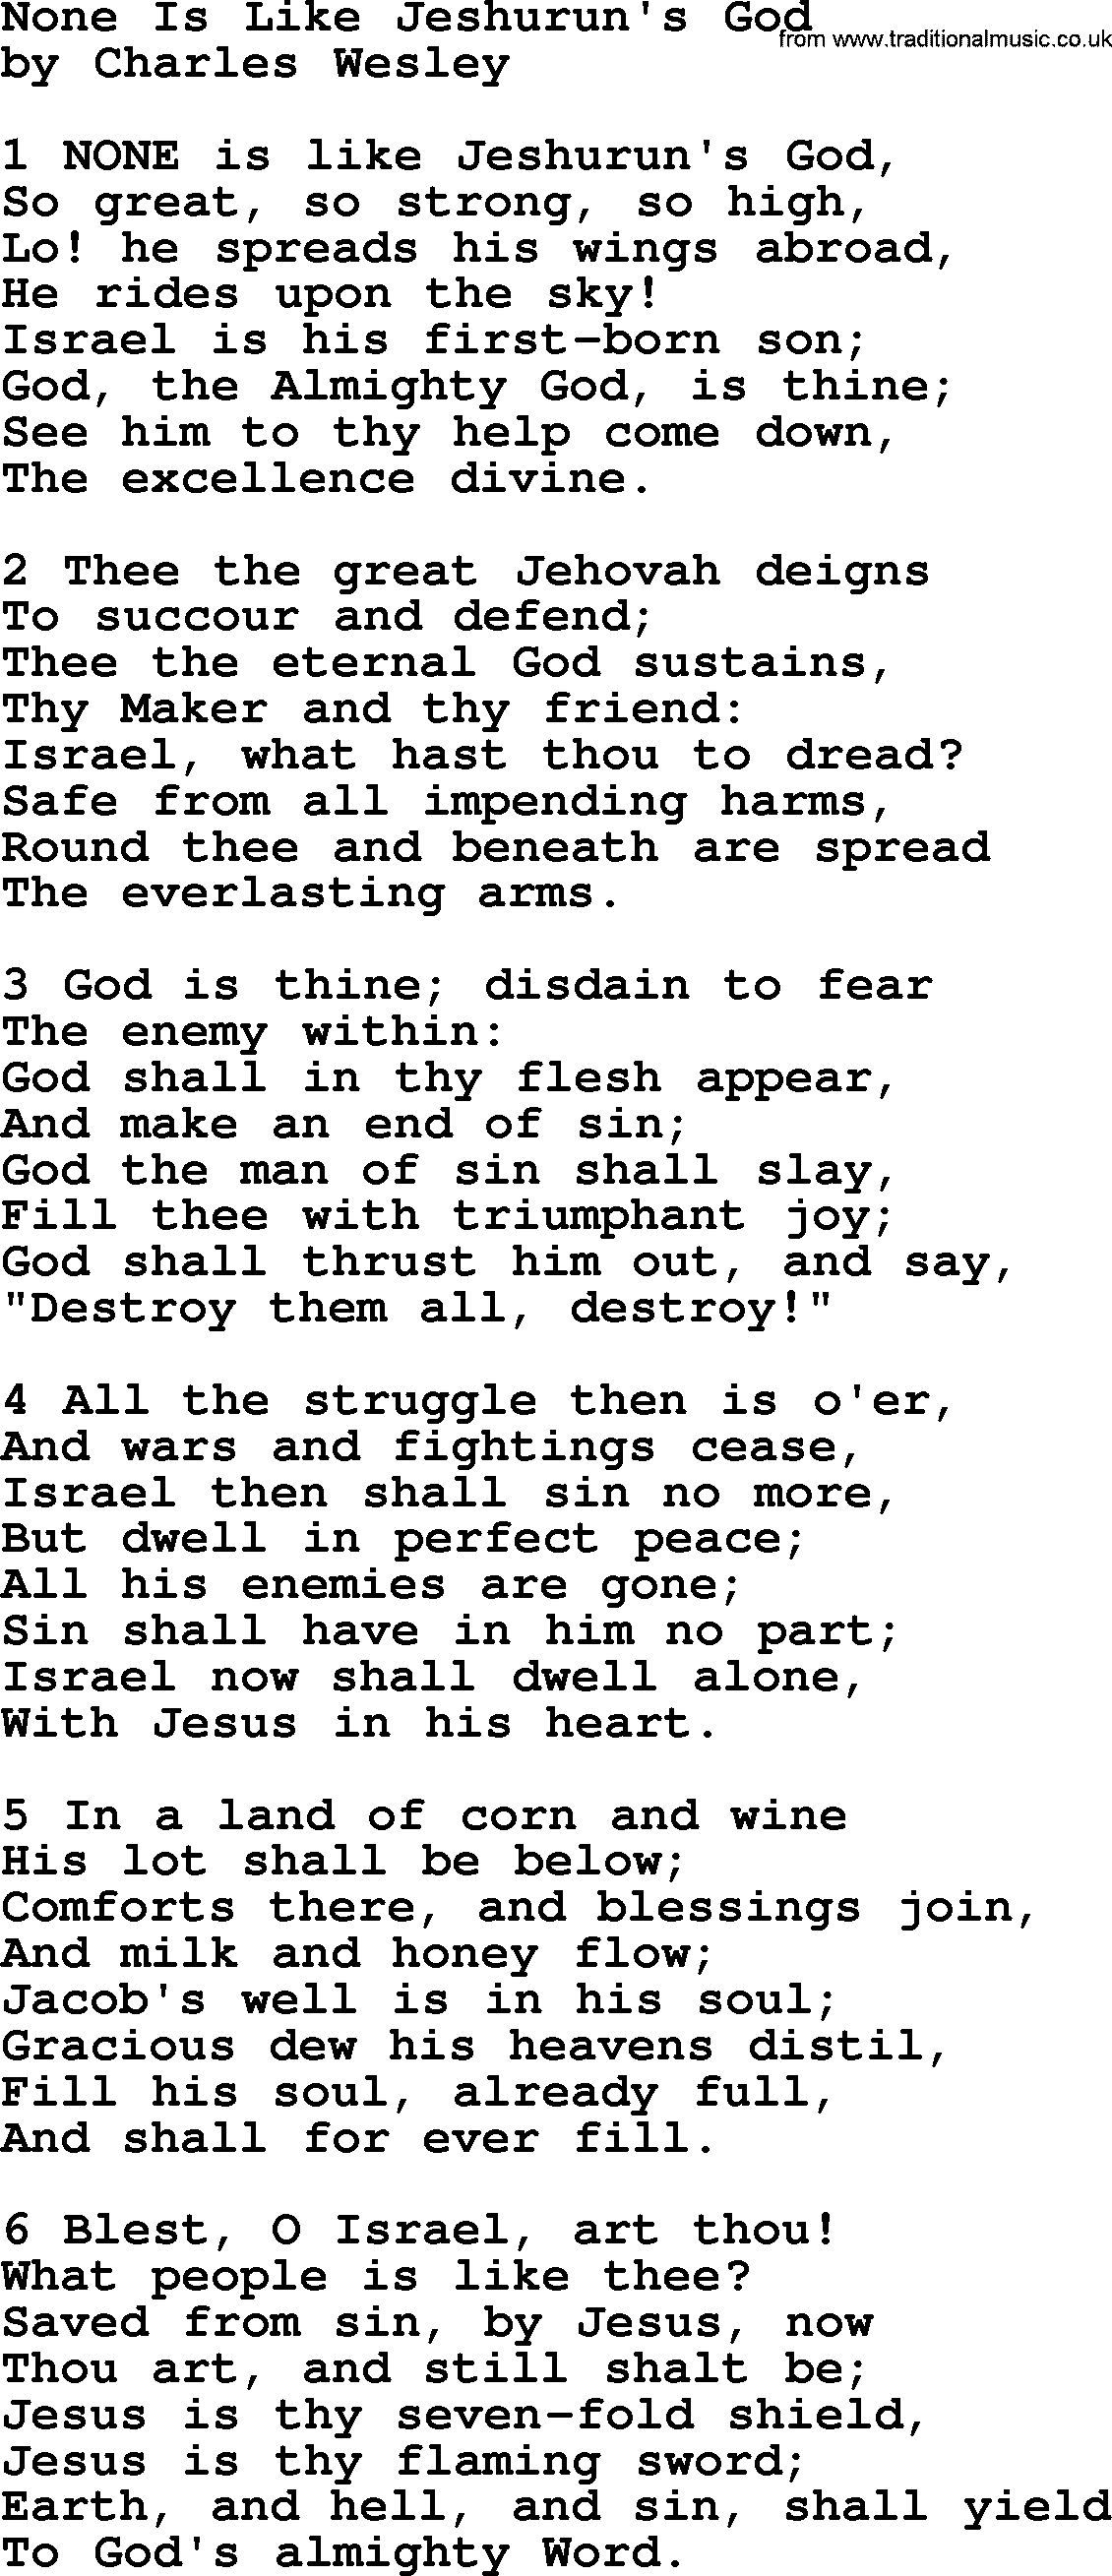 Charles Wesley hymn: None Is Like Jeshurun's God, lyrics